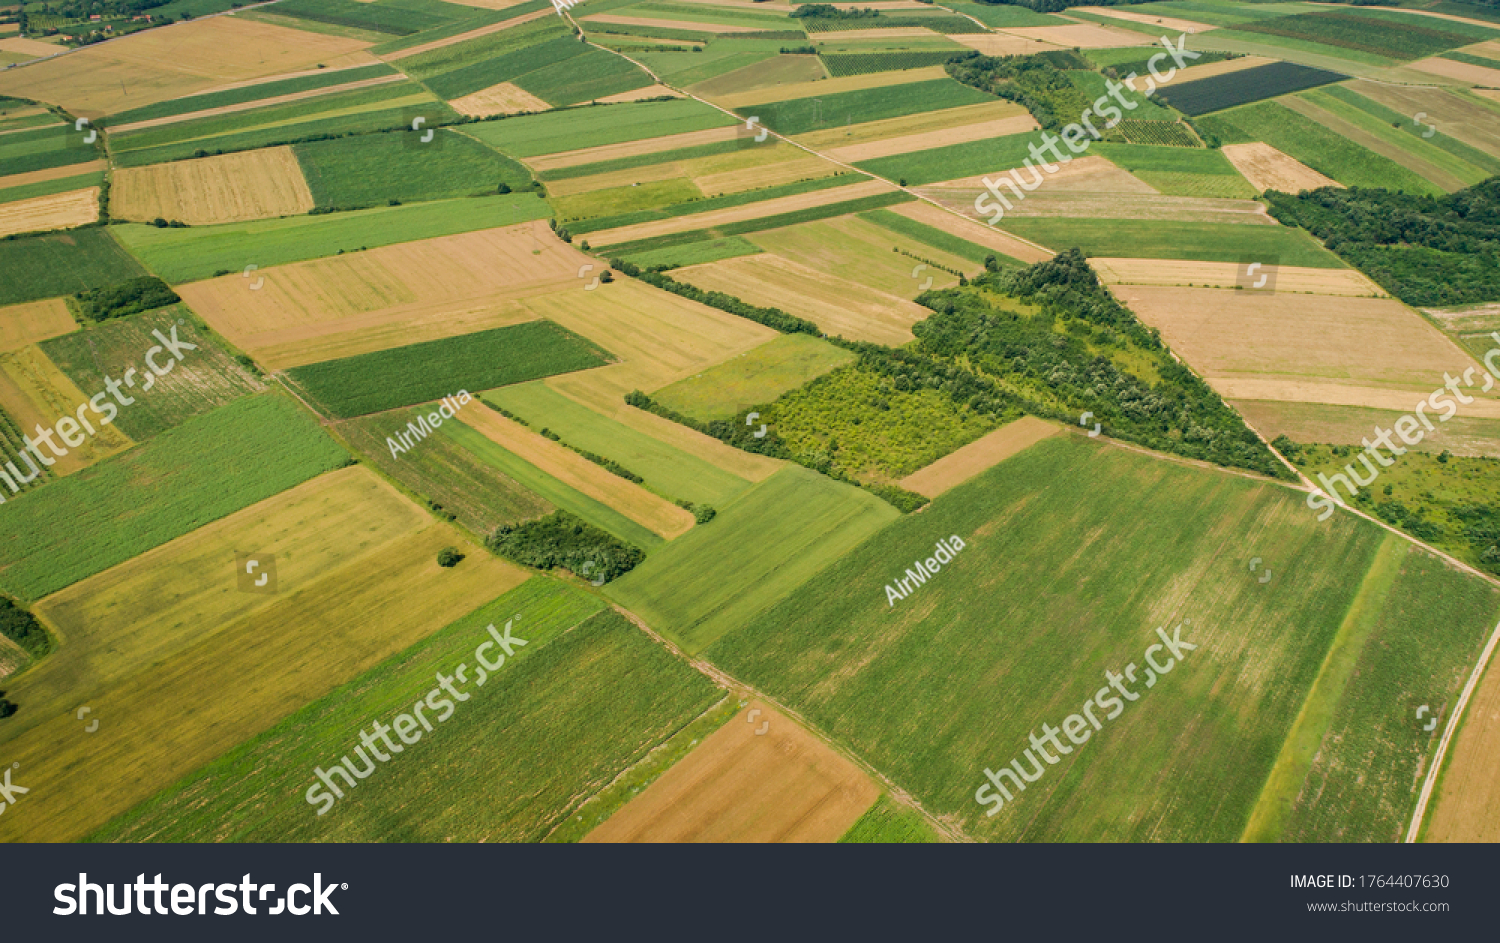 24,159 Serbia fields Images, Stock Photos & Vectors | Shutterstock